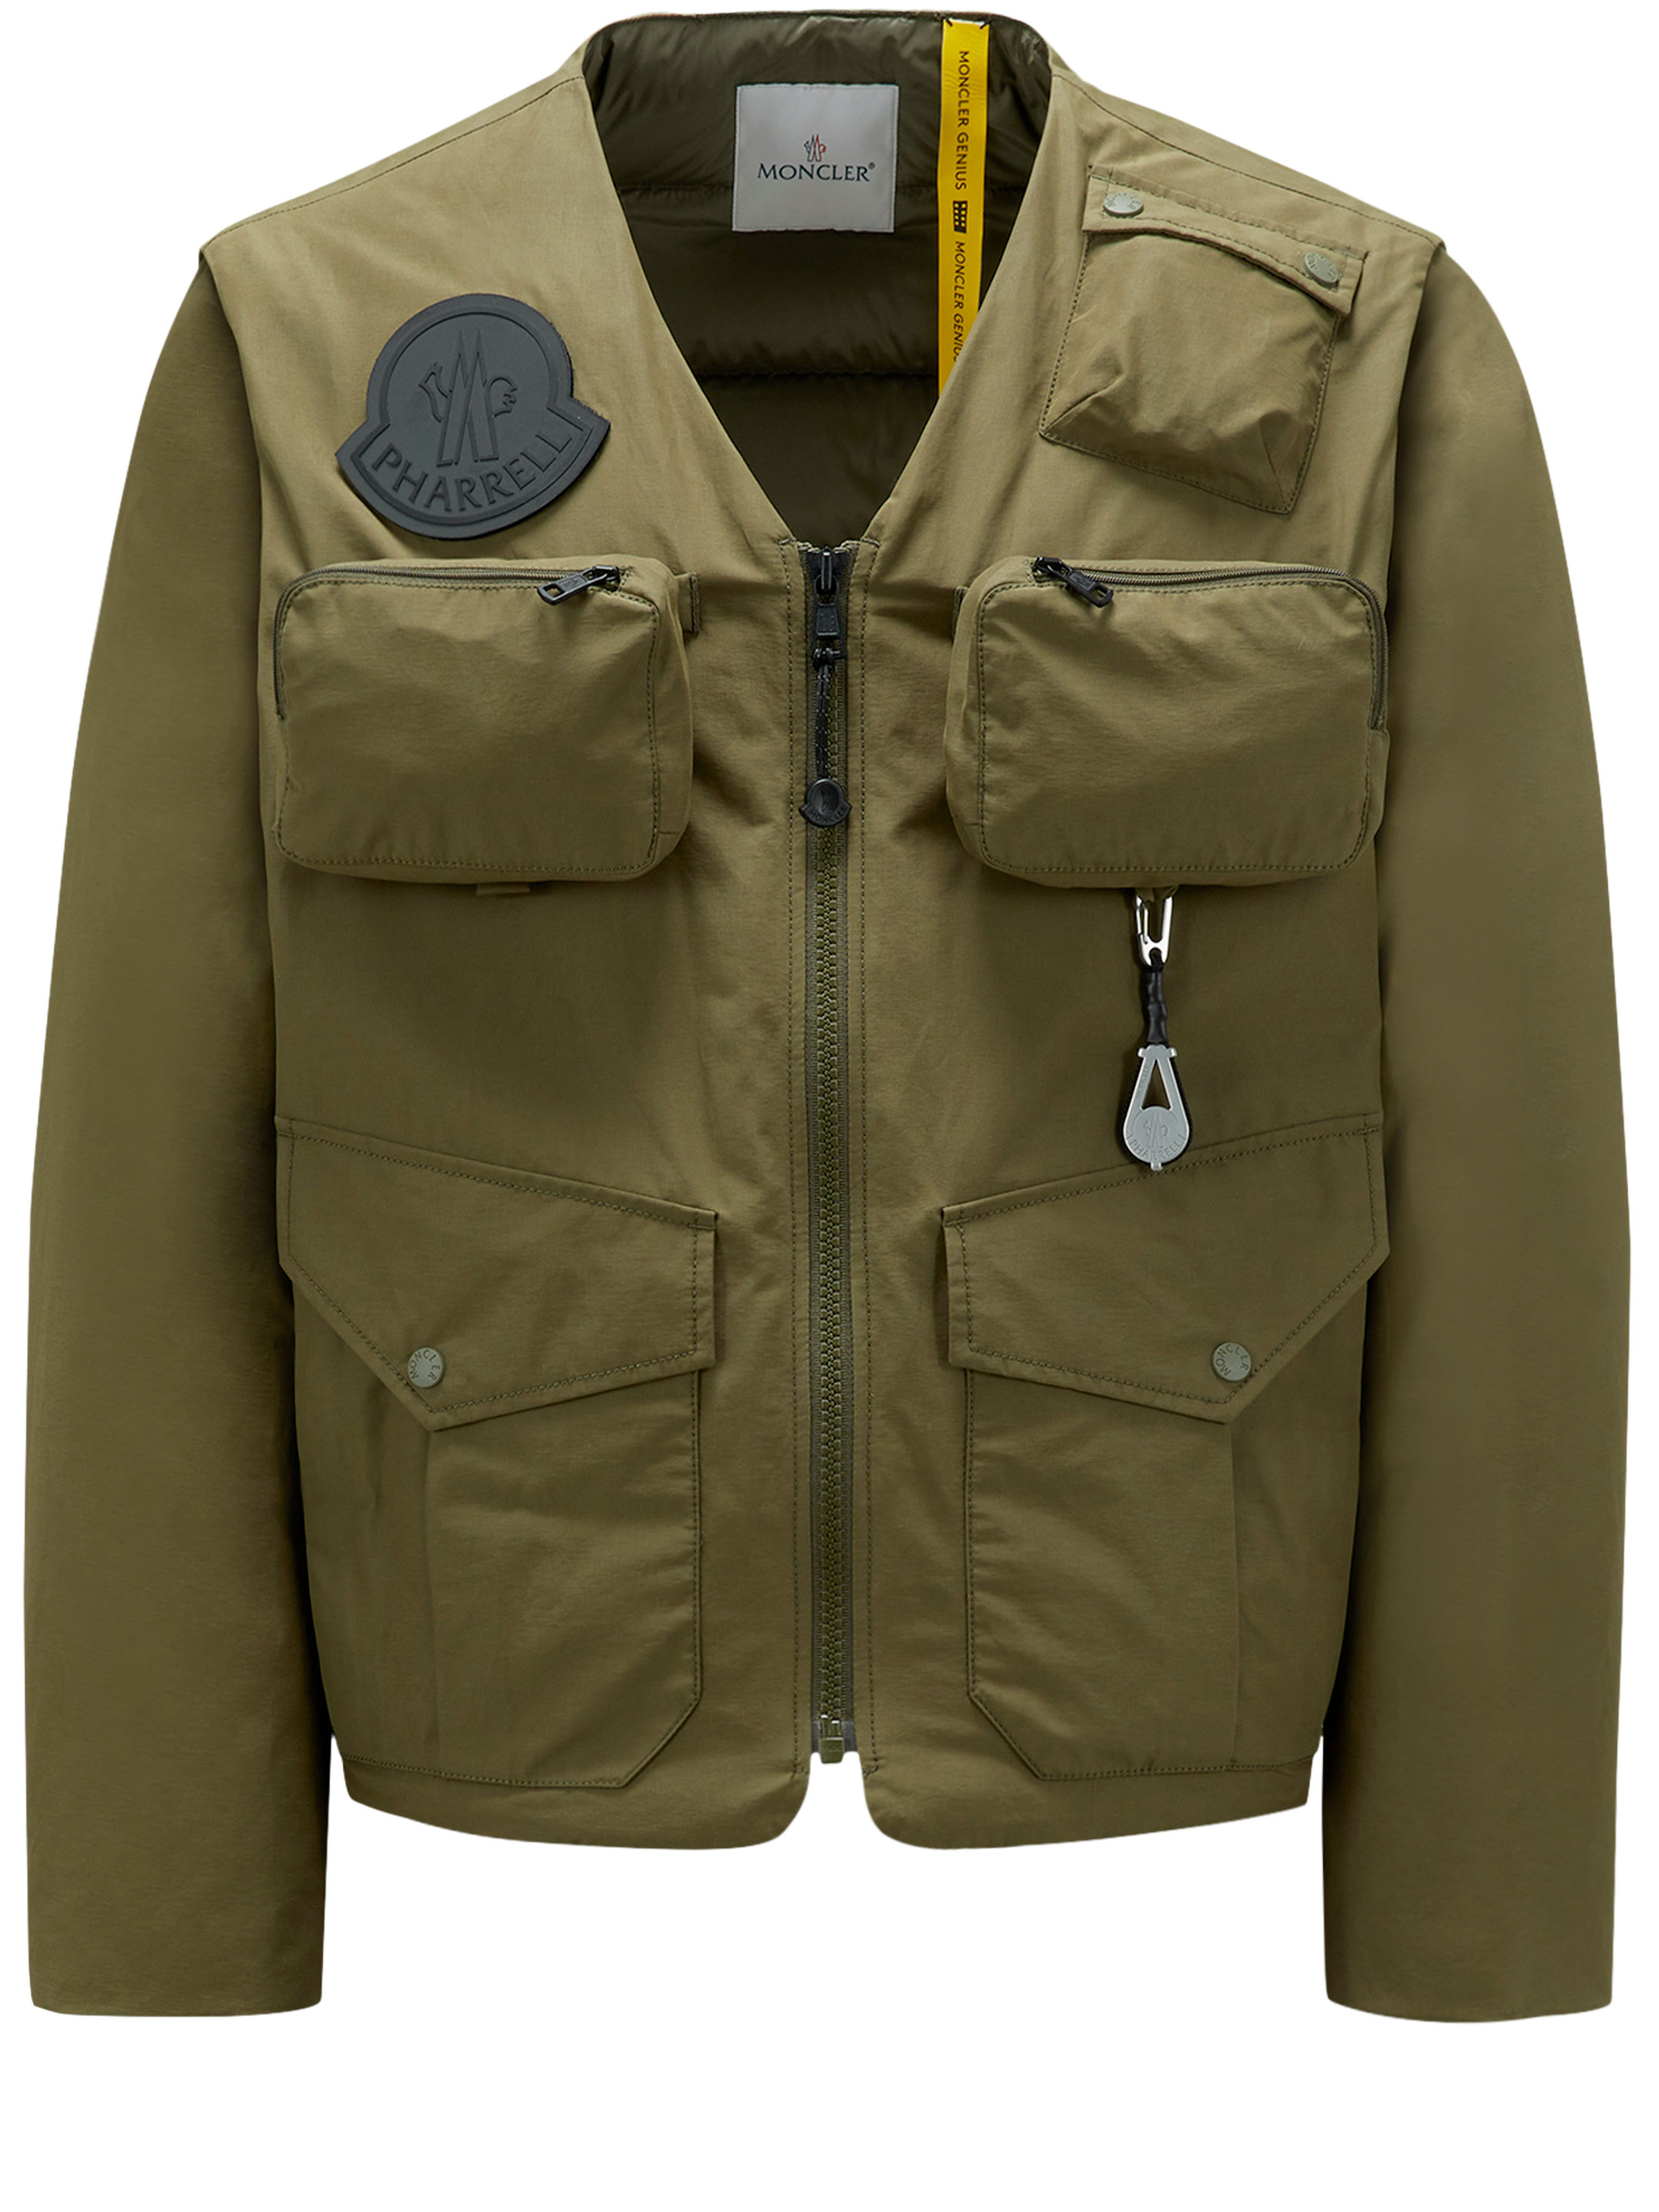 MONCLER X PHARRELL WILLIAMS - Maple jacket | Leam Roma - Luxury 